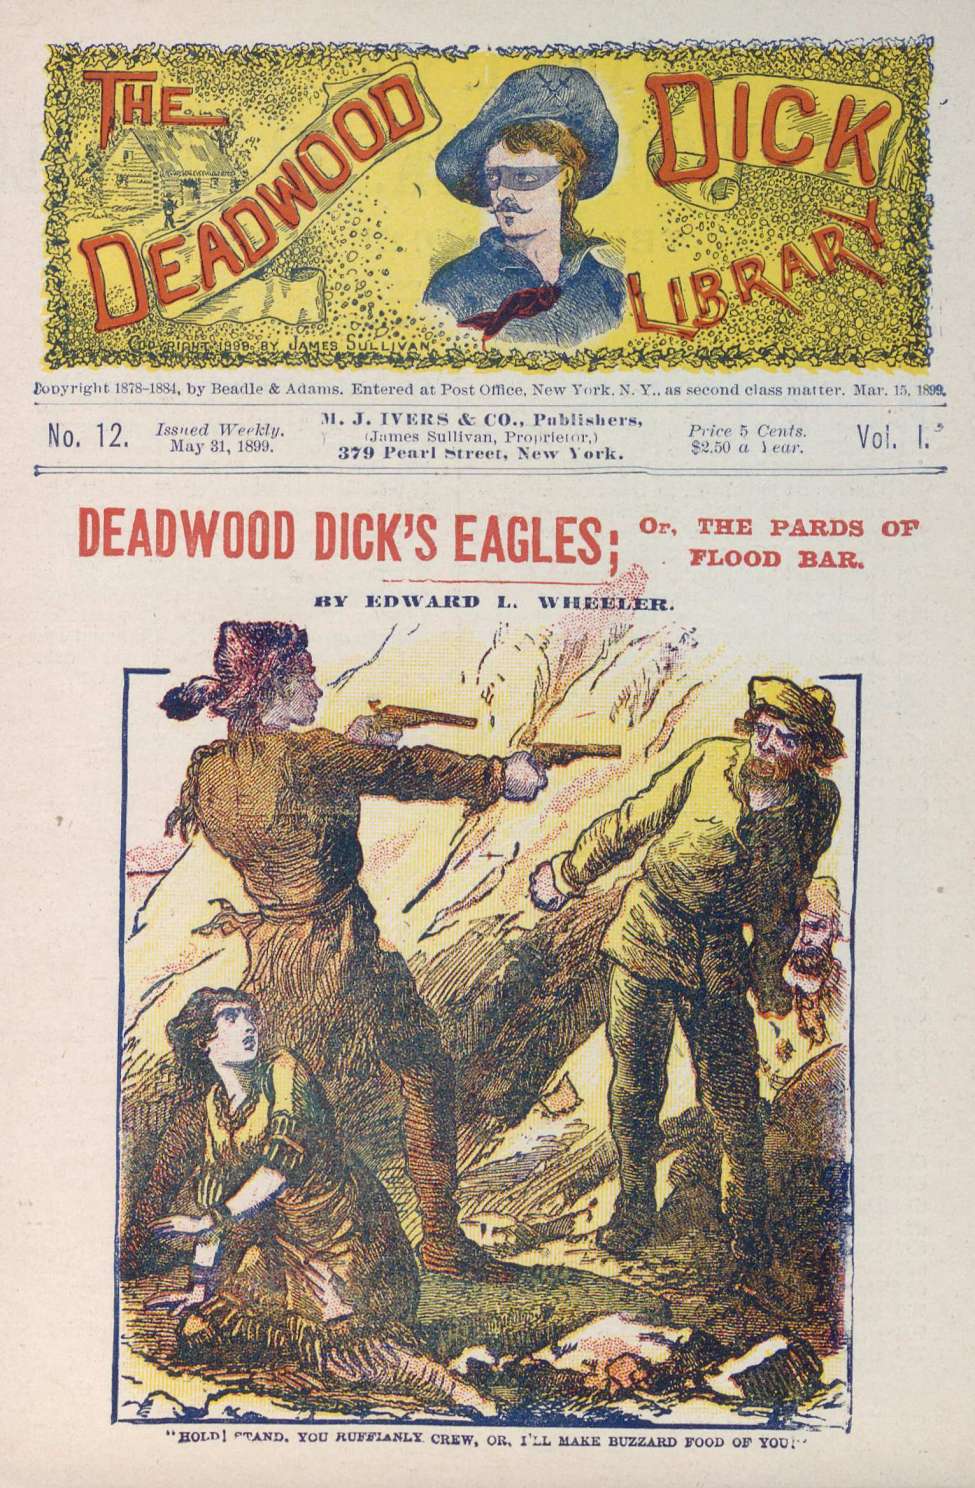 Book Cover For Deadwood Dick Library v1 12 - Deadwood Dick's Eagles